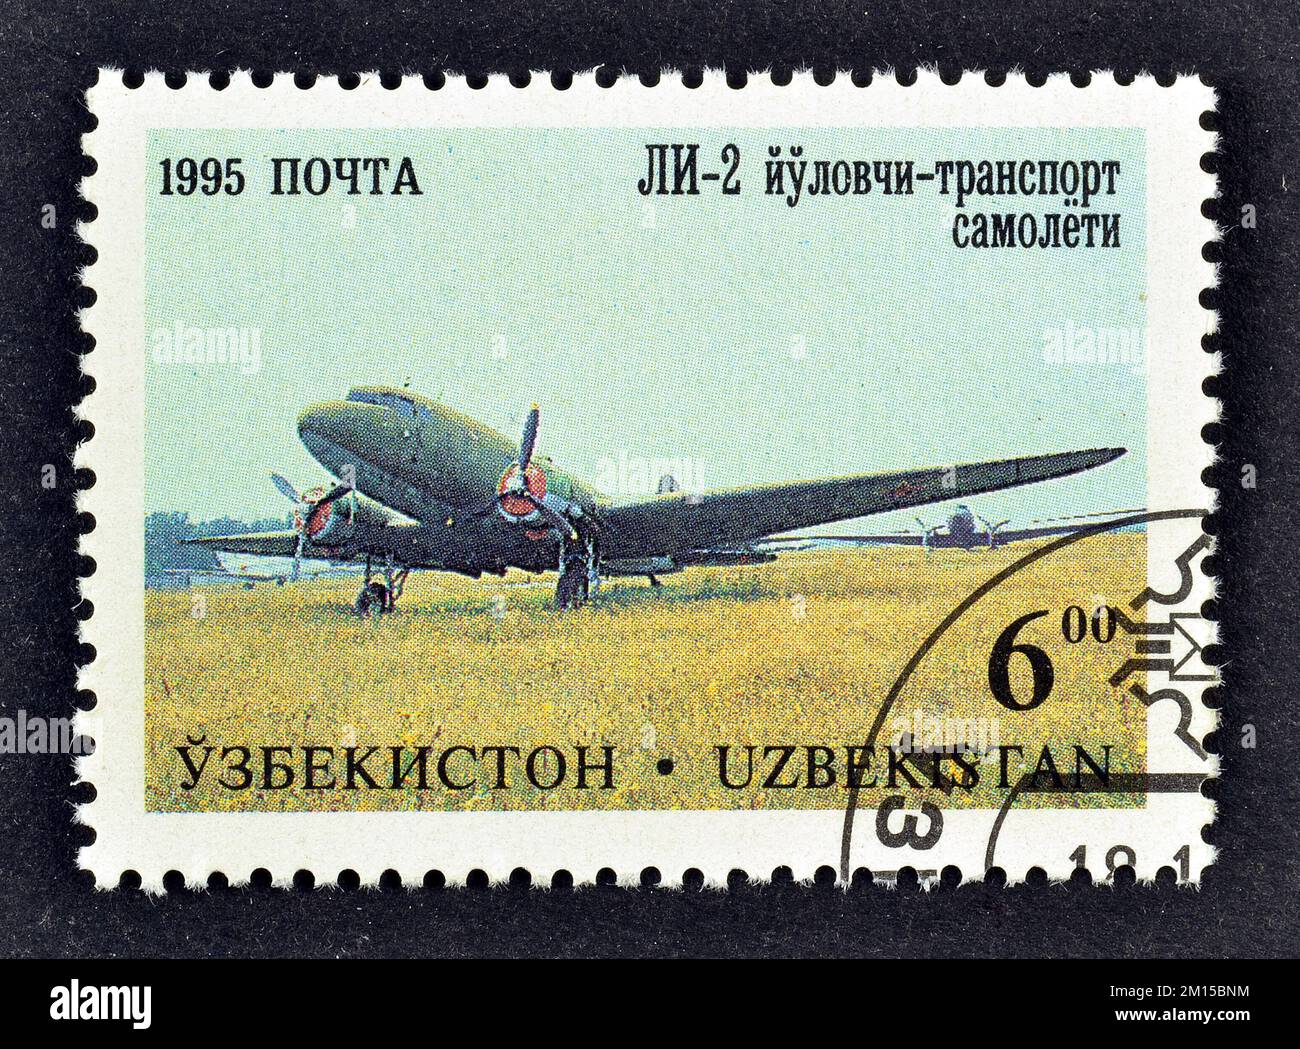 Cancelled postage stamp printed by Uzbekistan, that shows Lisunov Li-2 Airliner, Aircraft of Tashkent's (V.P. Chkalov) Aircraft Factory, circa 1995. Stock Photo